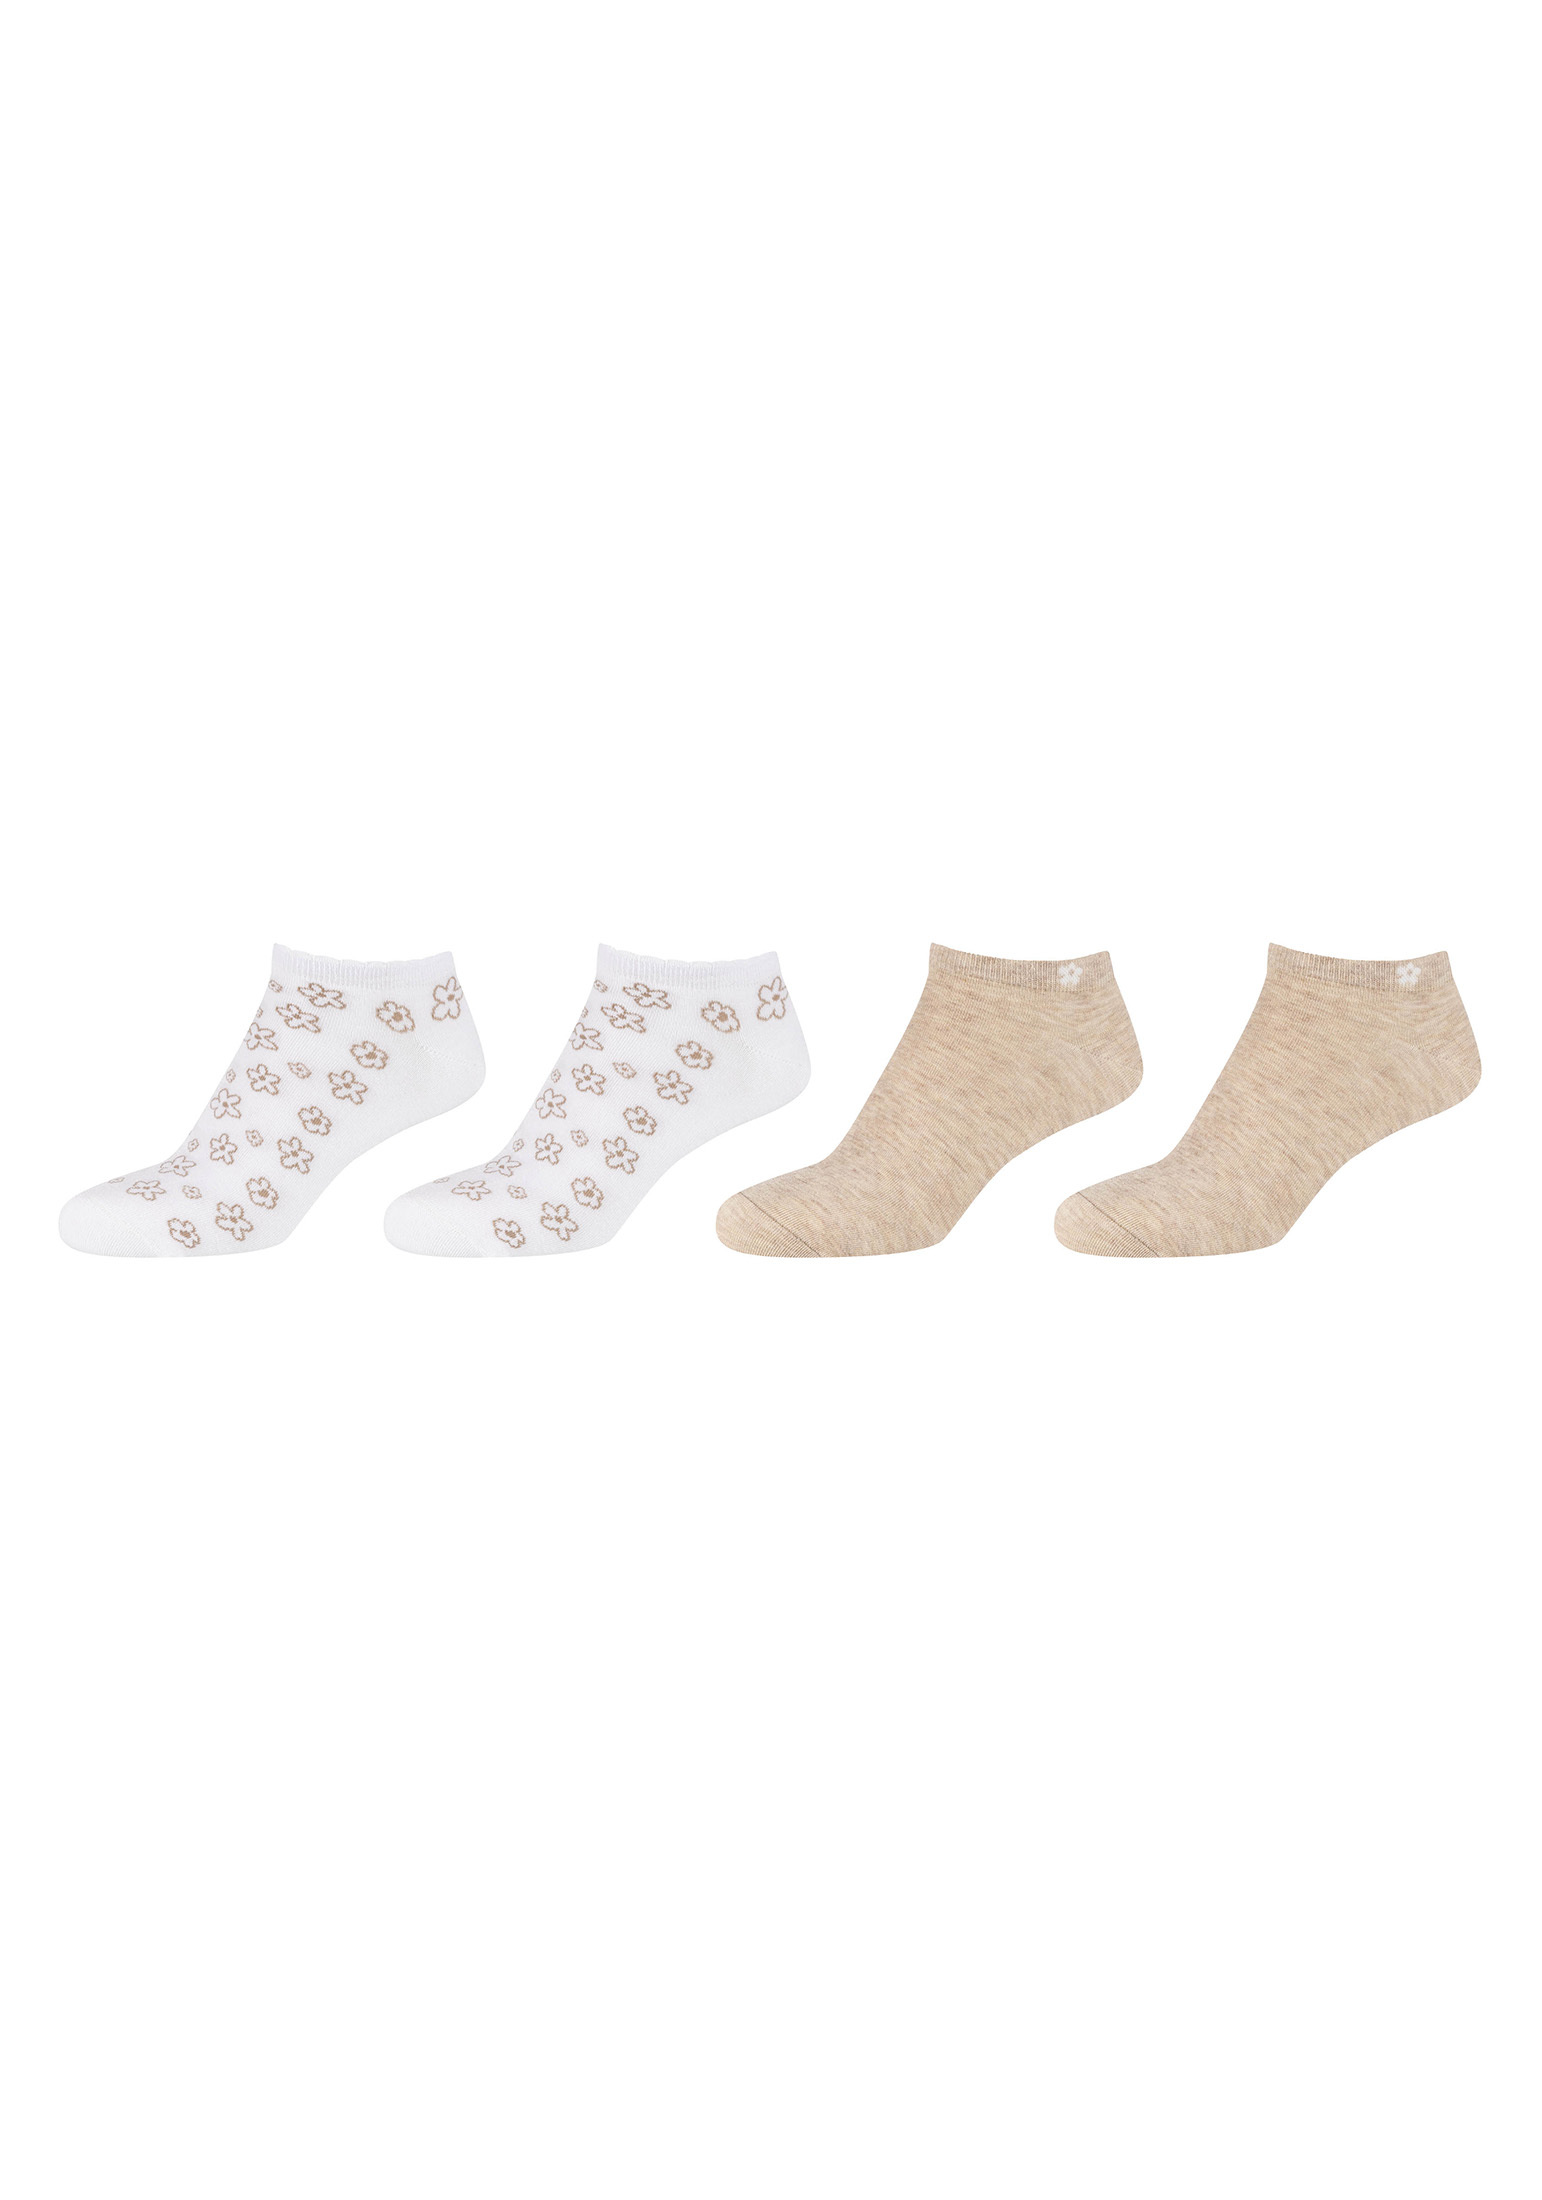 Носки camano Sneaker 4 шт silky touch, белый